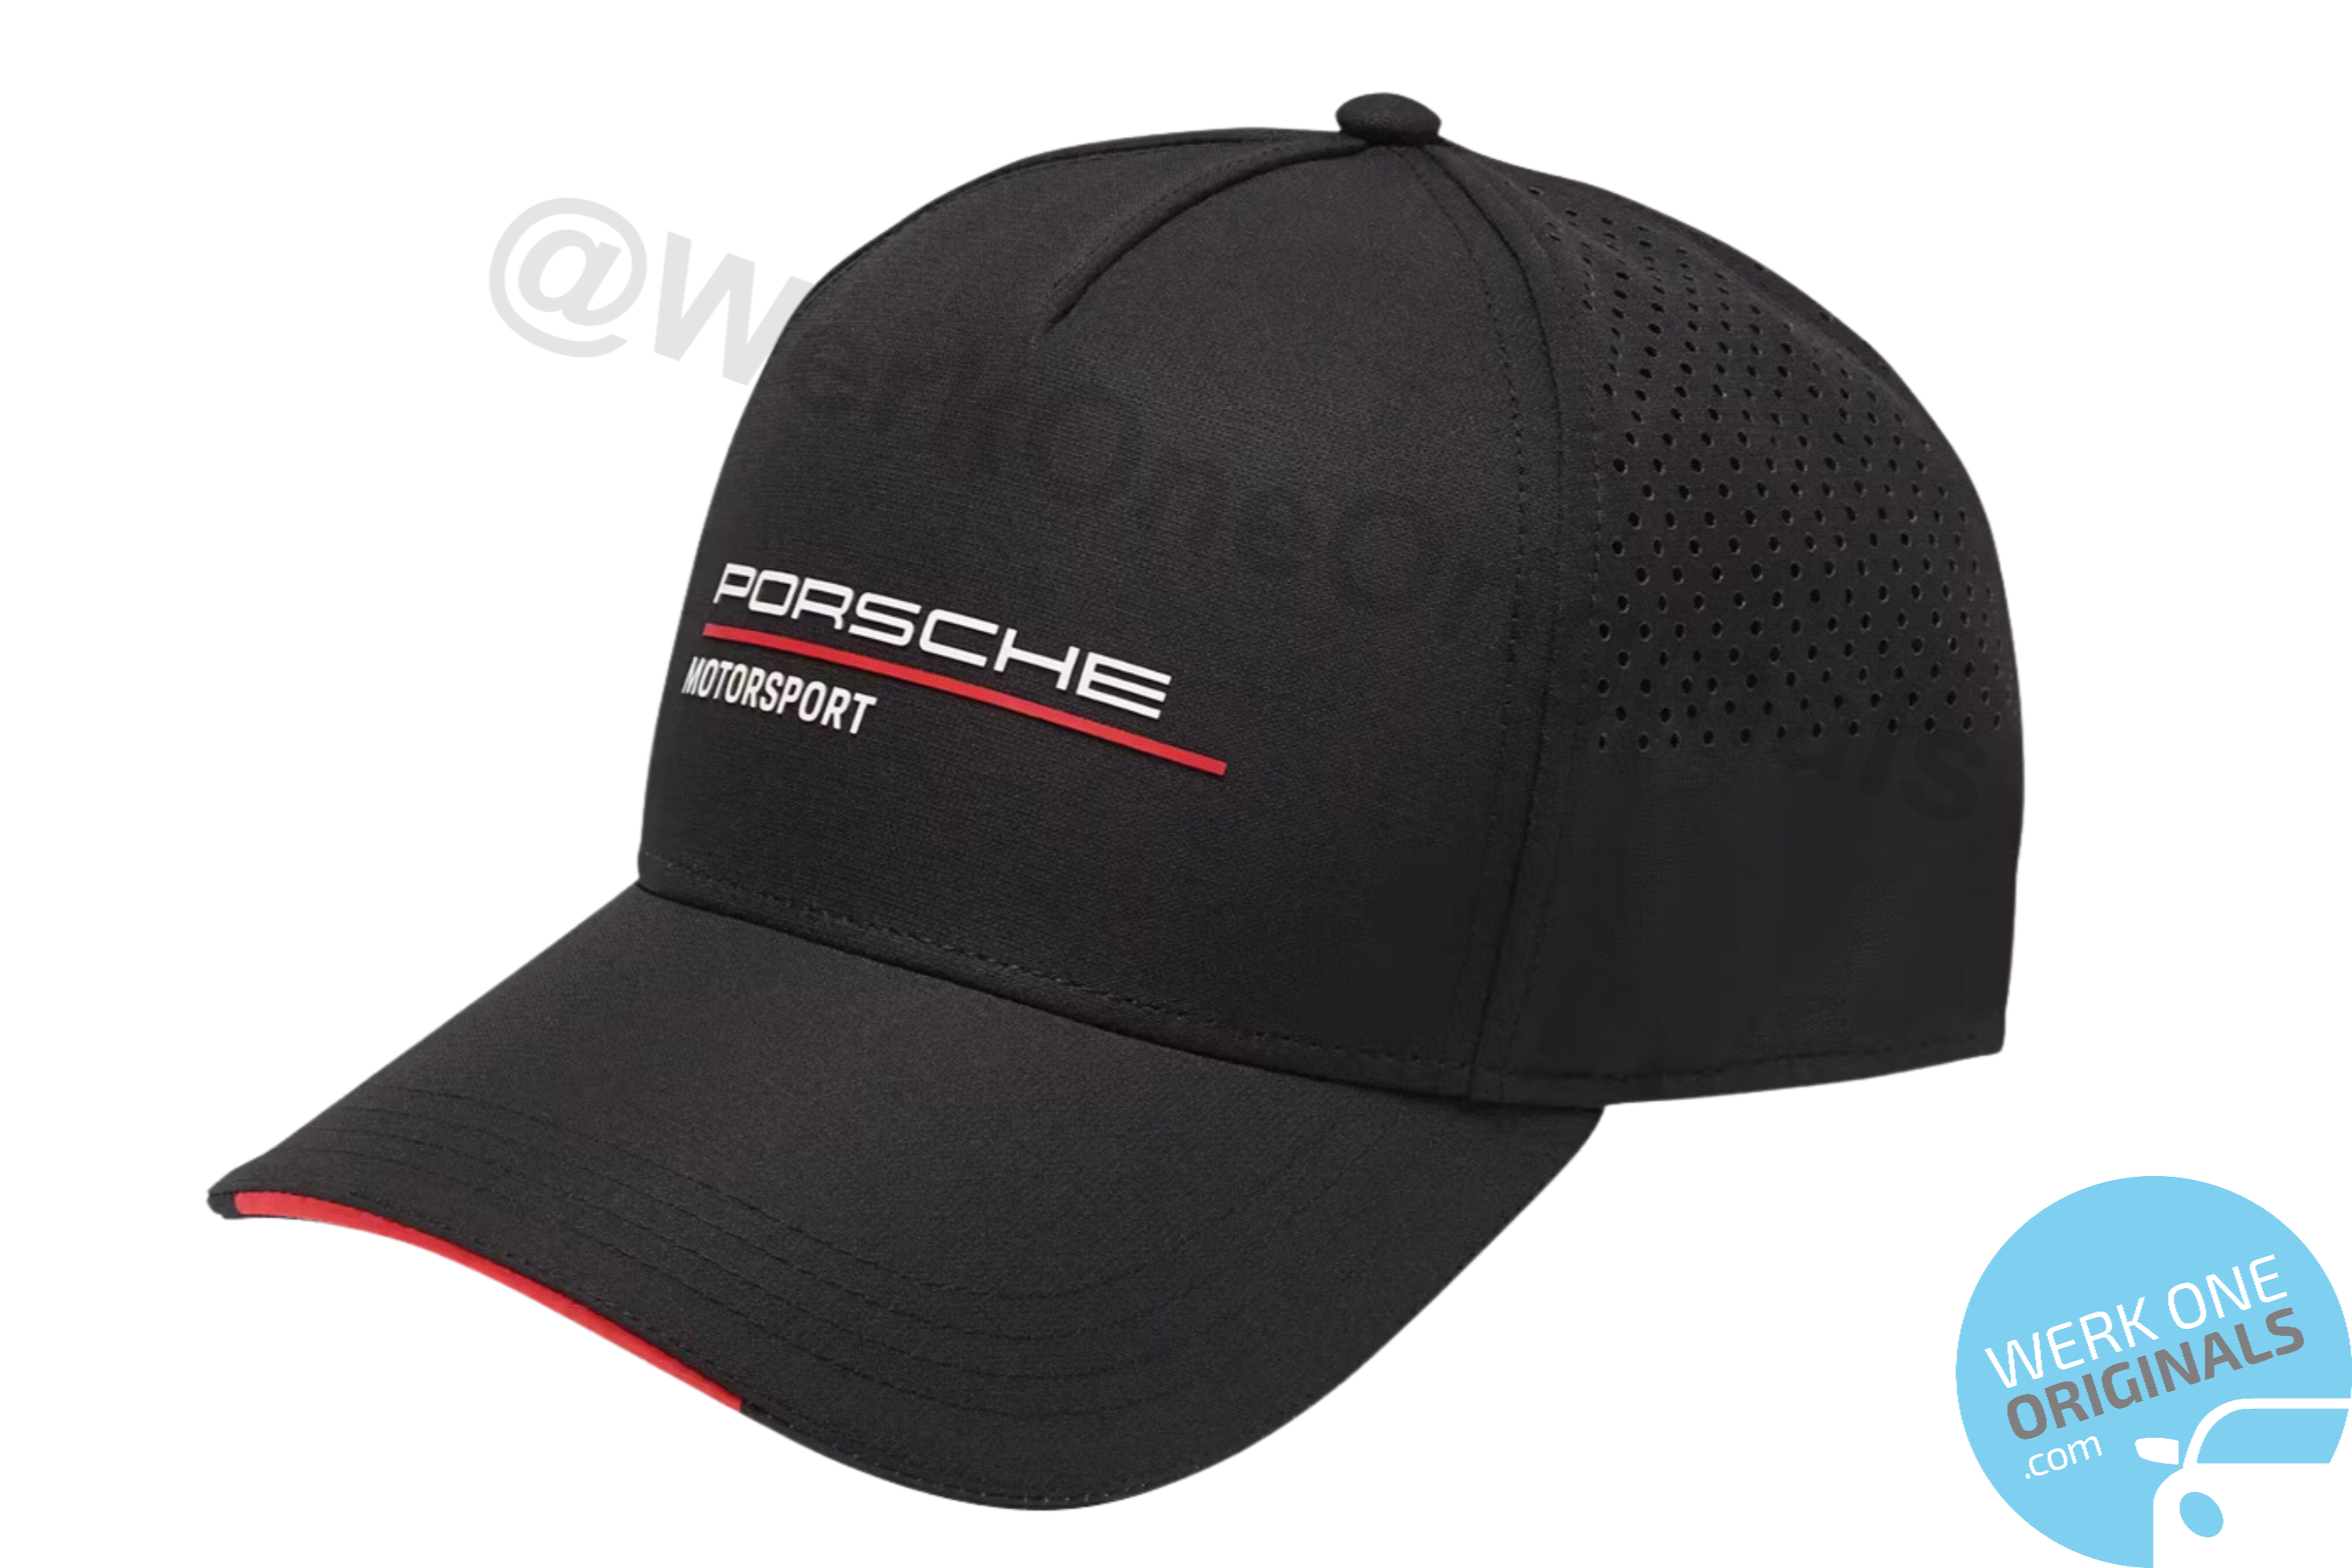 Official Porsche Motorsport Baseball Cap - Black